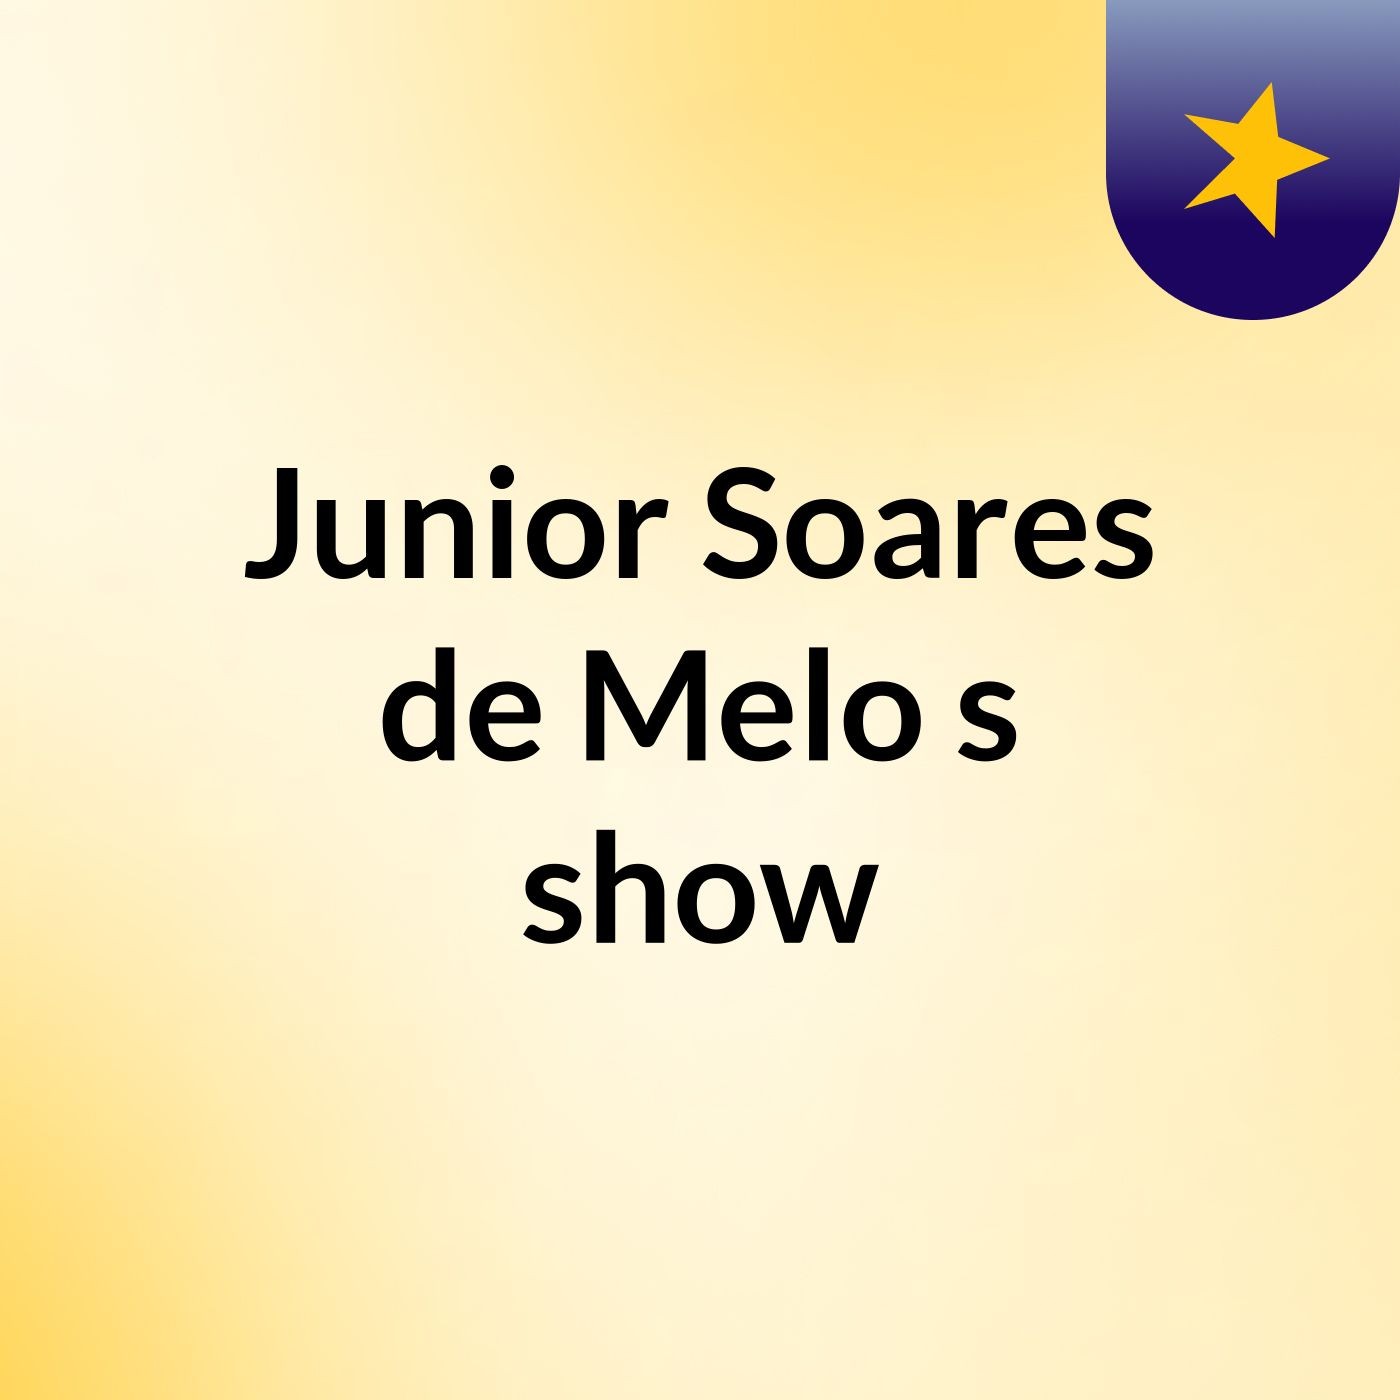 Junior Soares de Melo's show